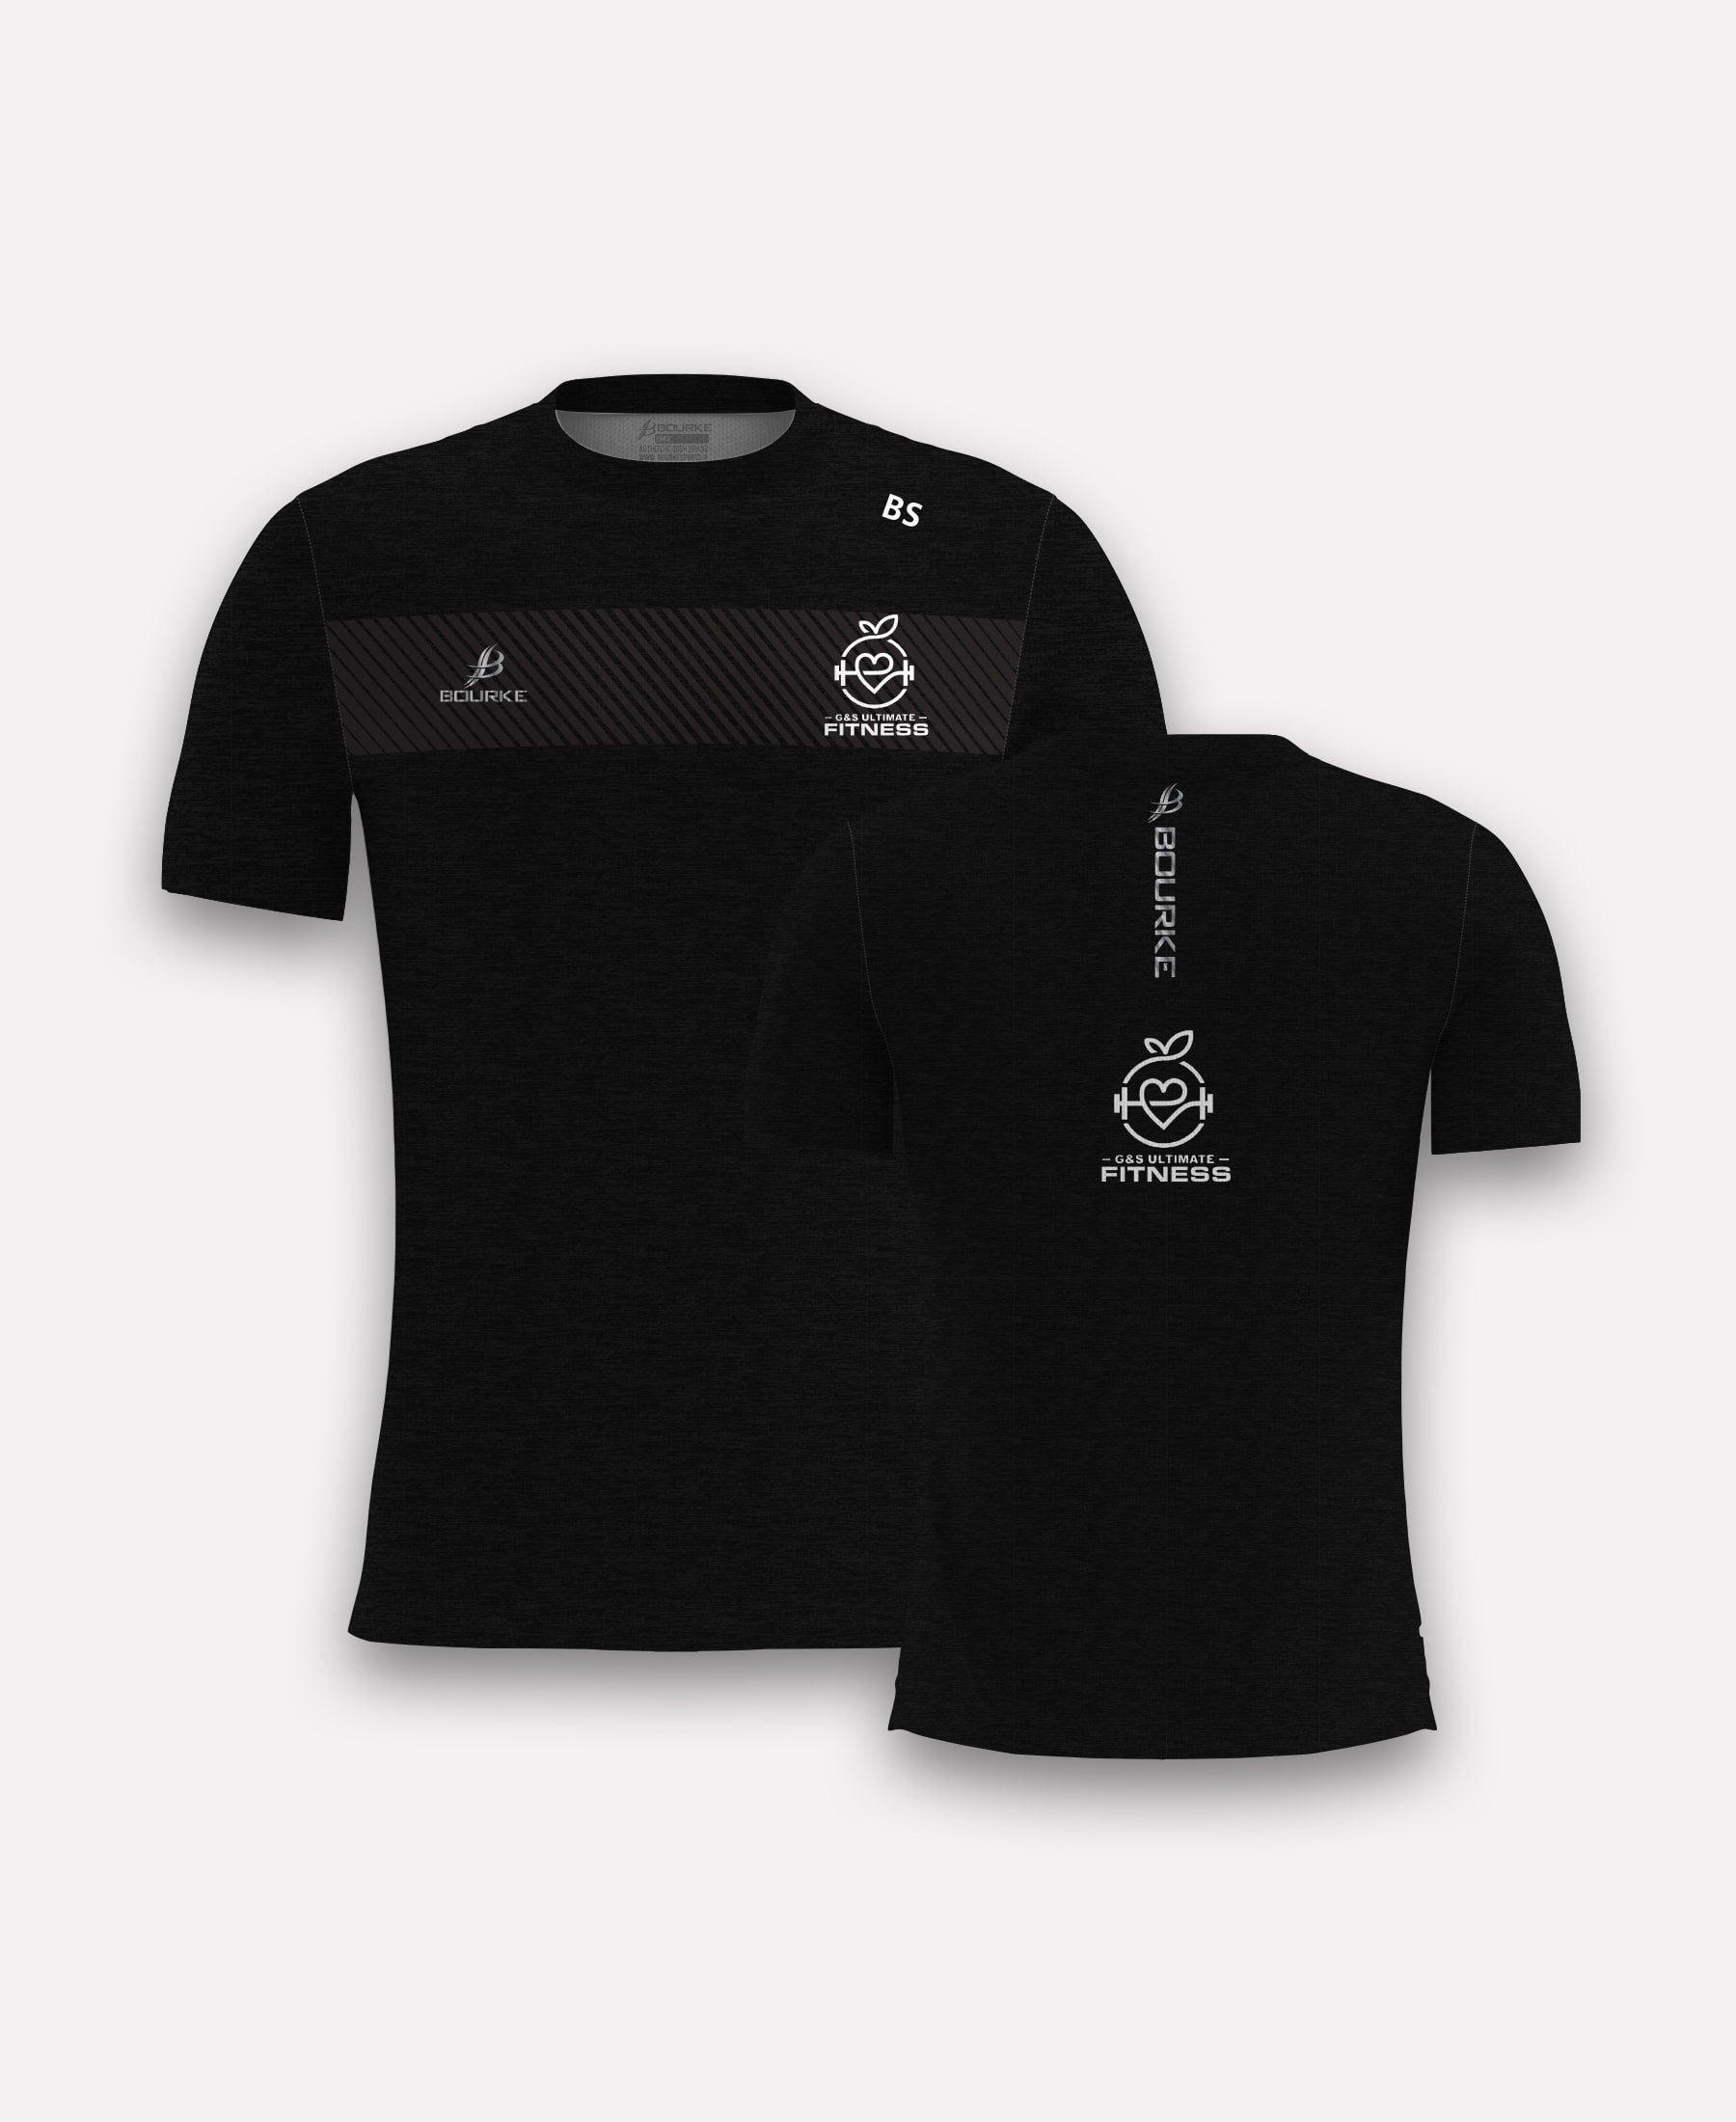 G&S Ultimate Fitness TACA T-Shirt (Black)